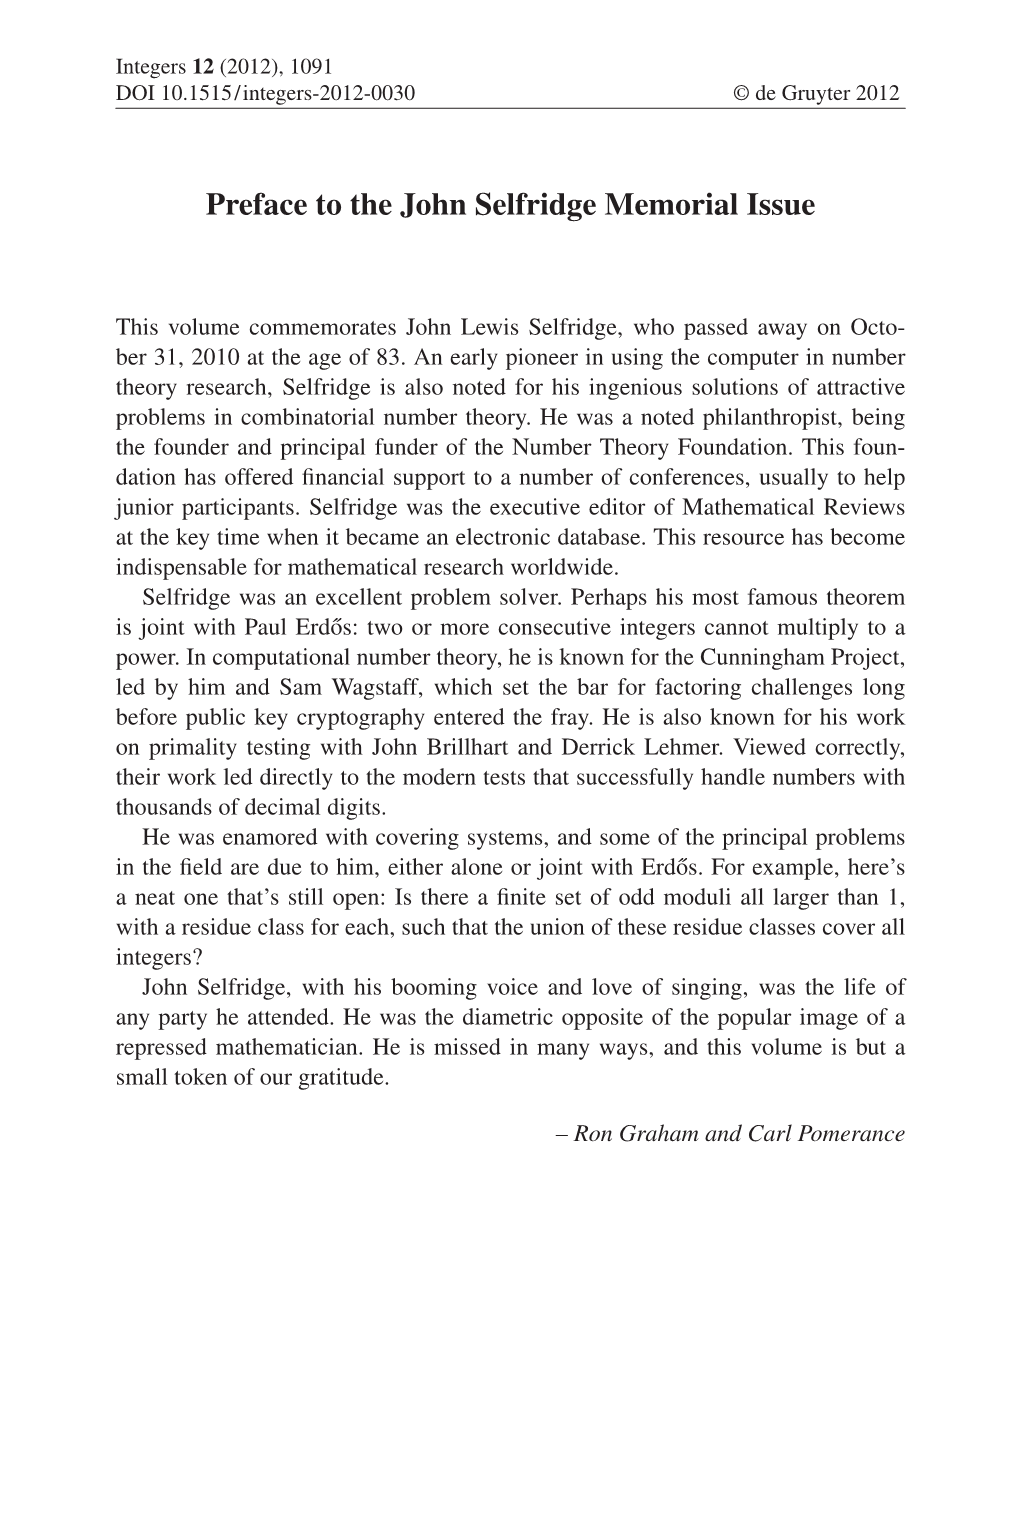 Preface to the John Selfridge Memorial Issue